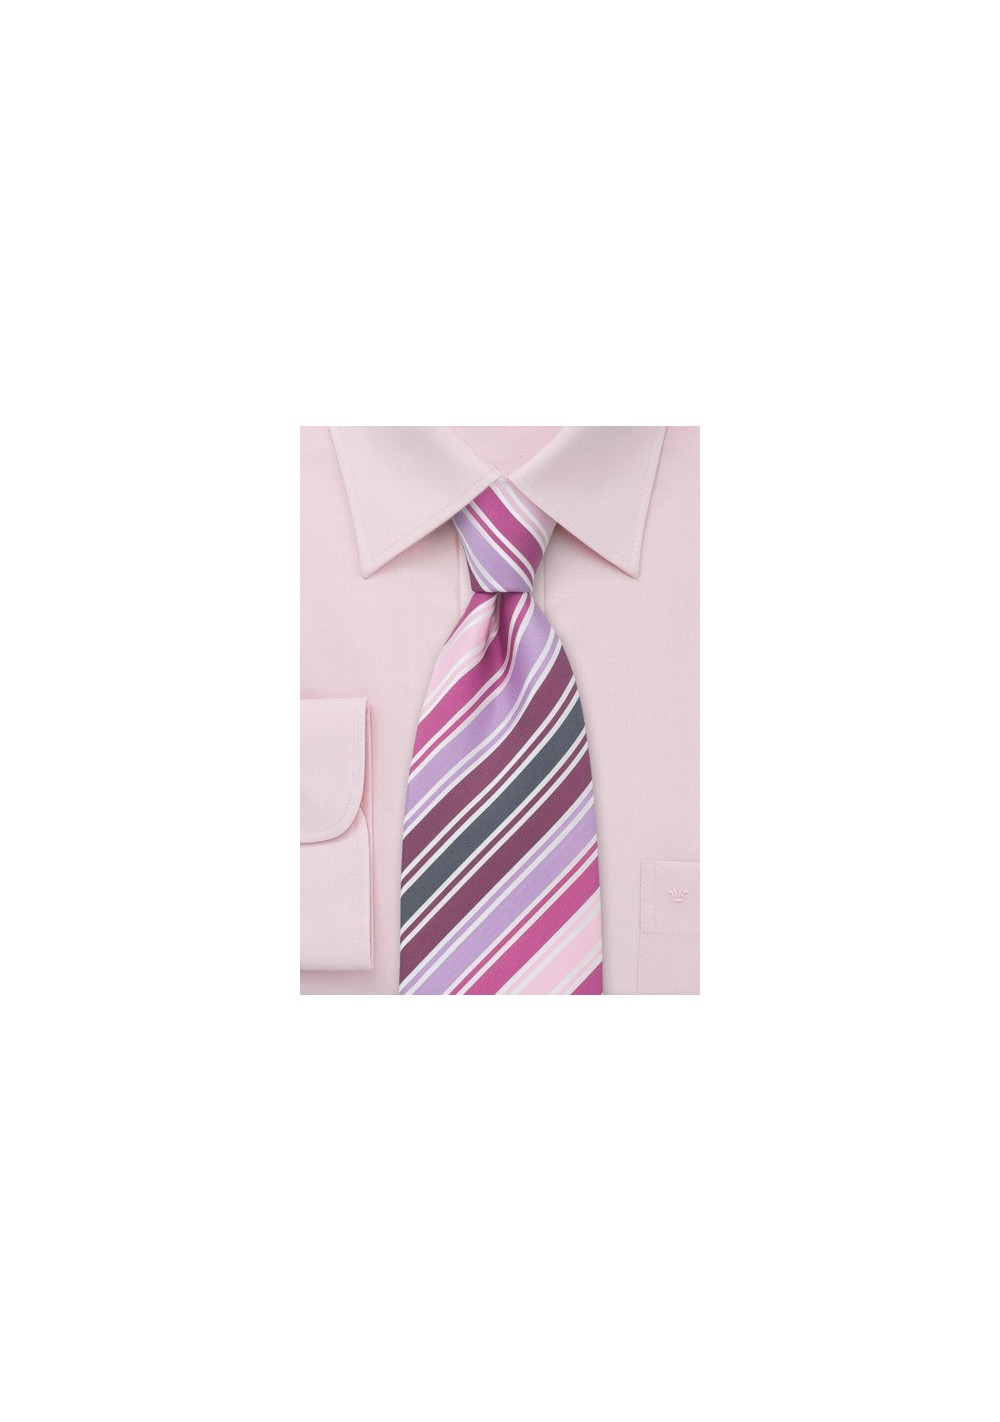 Silk Tie in Pink, Fuchsia, Lavender, Purple